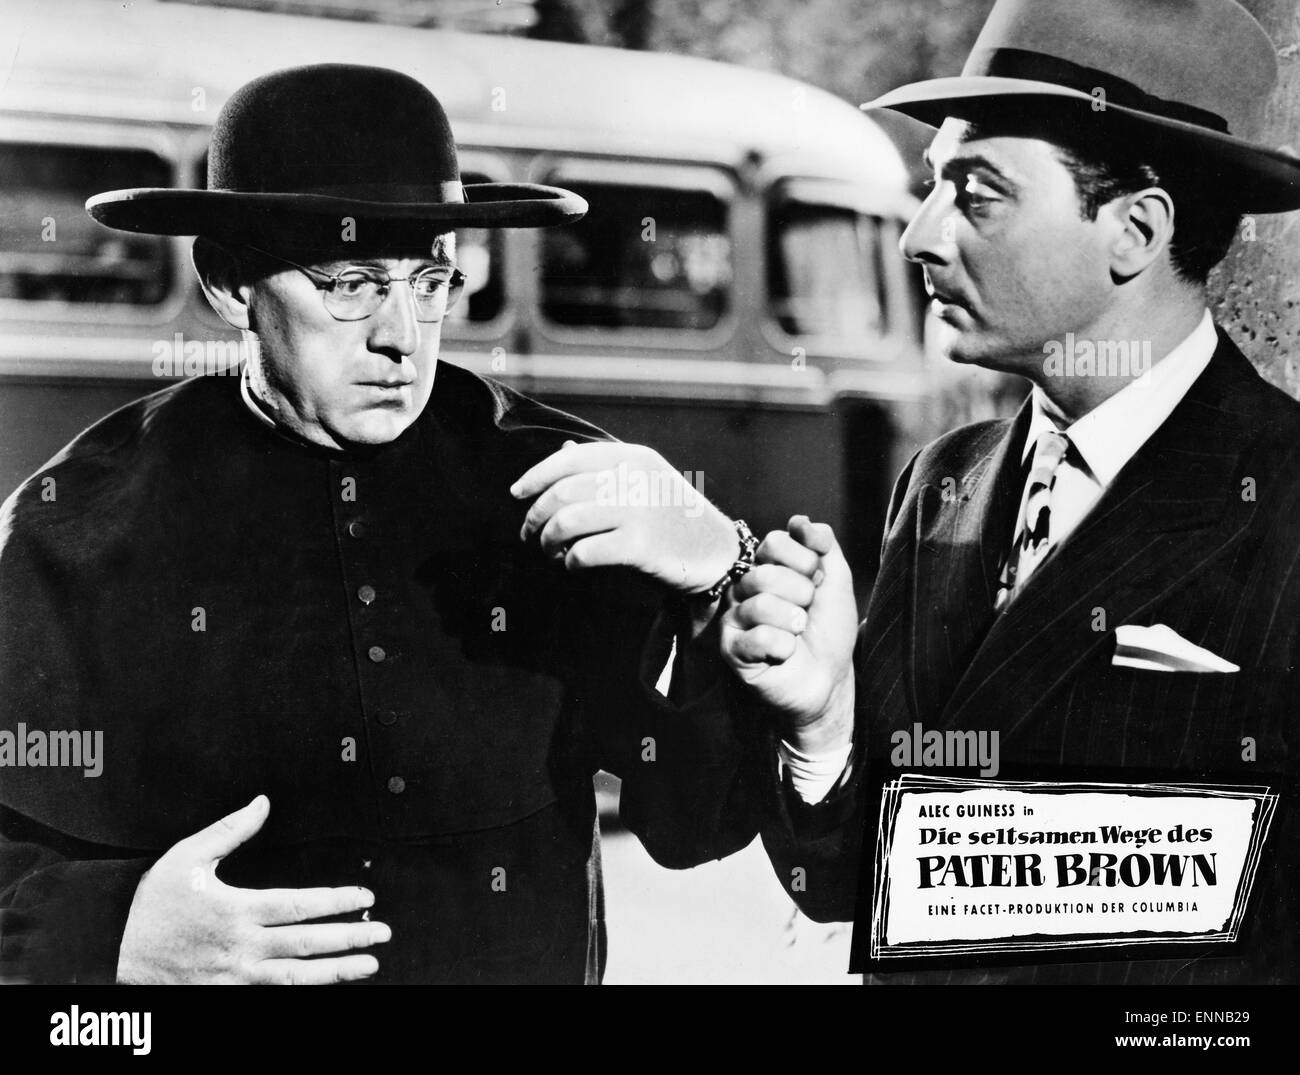 Father Brown, Großbritannien 1954, aka: Die seltsamen Wege des Pater Brown, Regie: Robert Hamer, Darsteller: Alec Guinness, Pete Stock Photo